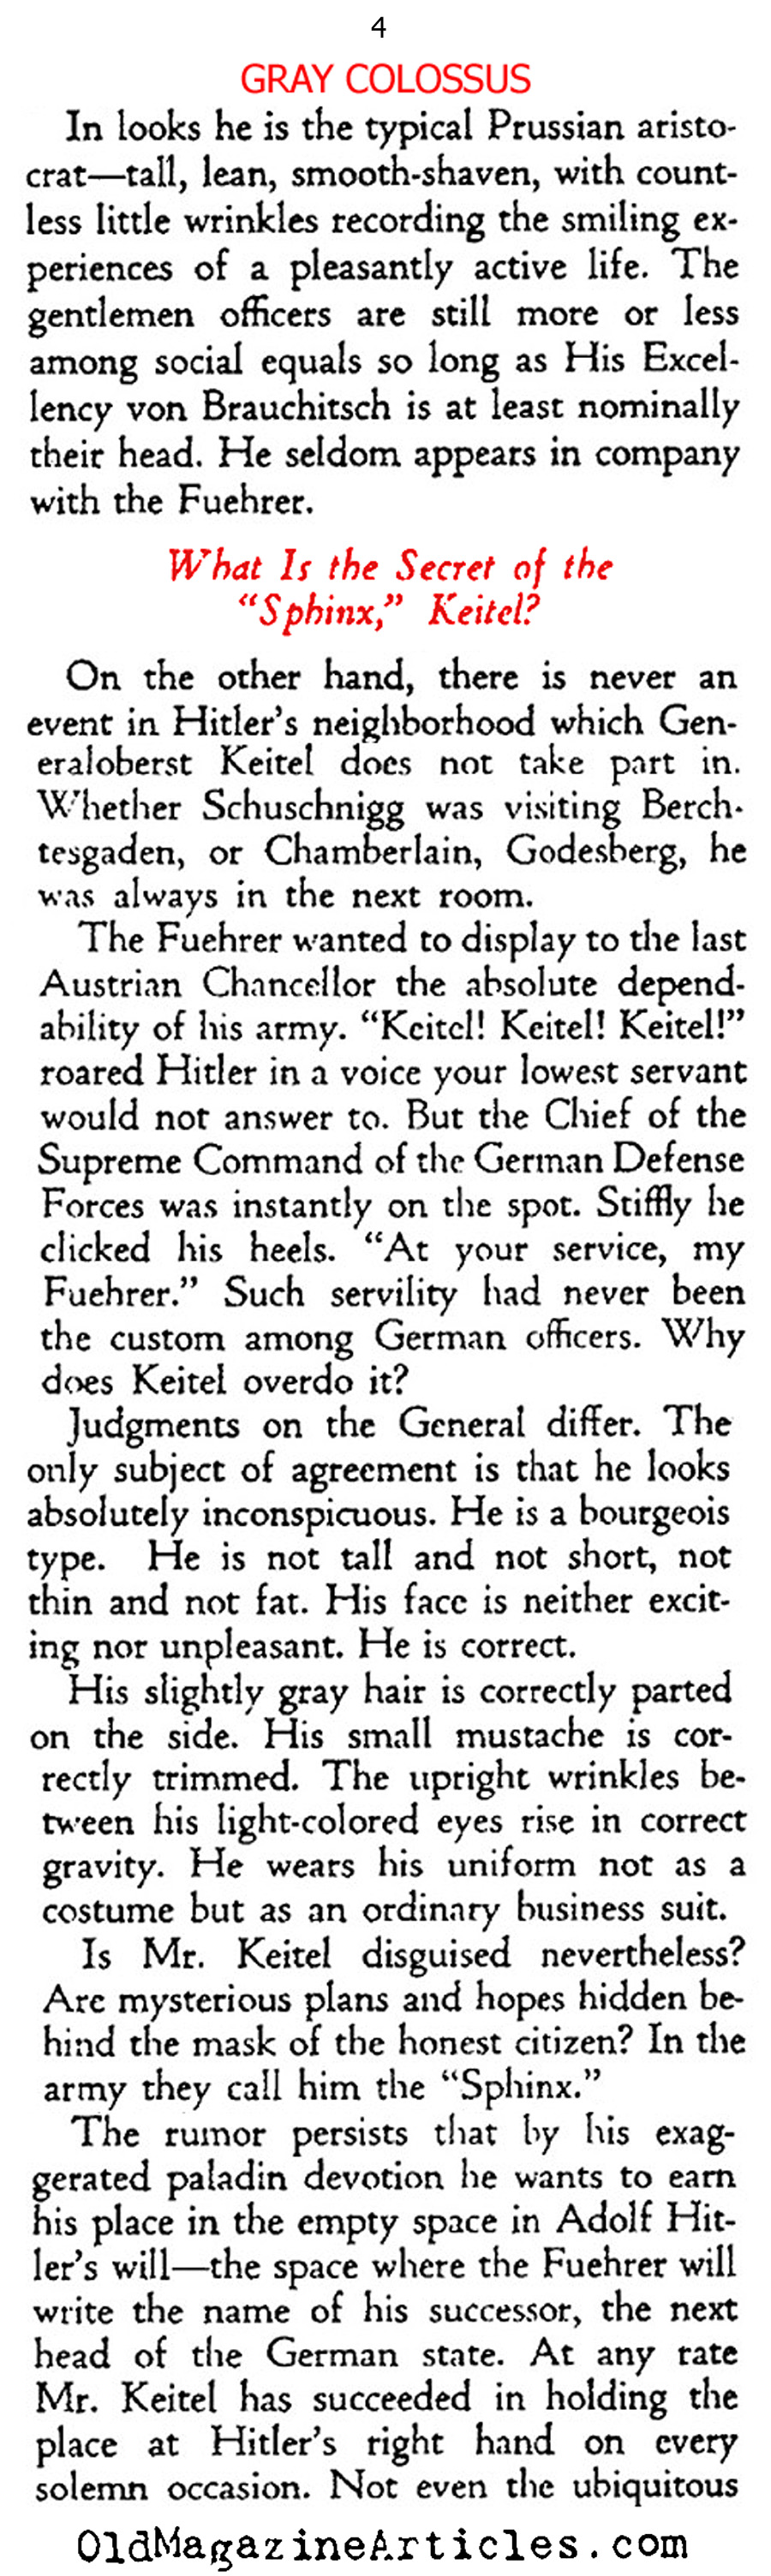 Military Buildup in Germany (Ken Magazine, 1939)